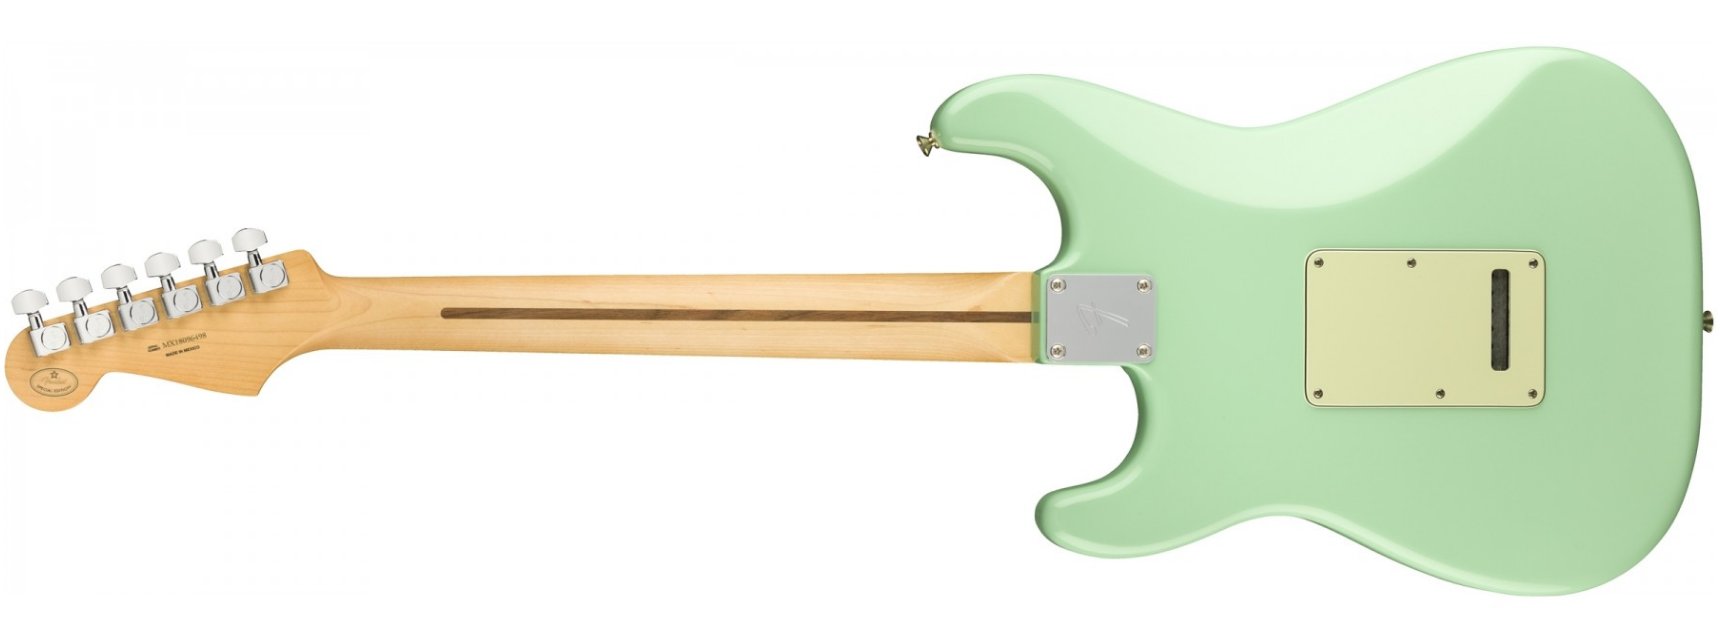 Fender Player Stratocaster MN/Surf Green (Ltd Edition)